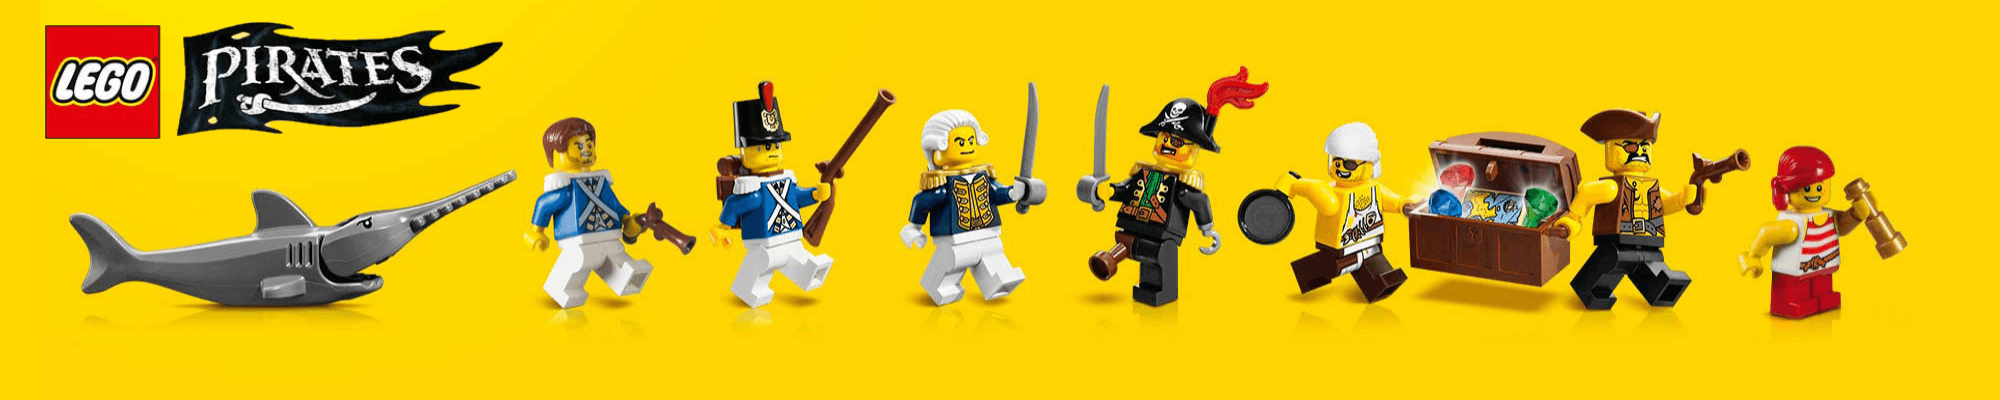 LEGO Pirates NZ